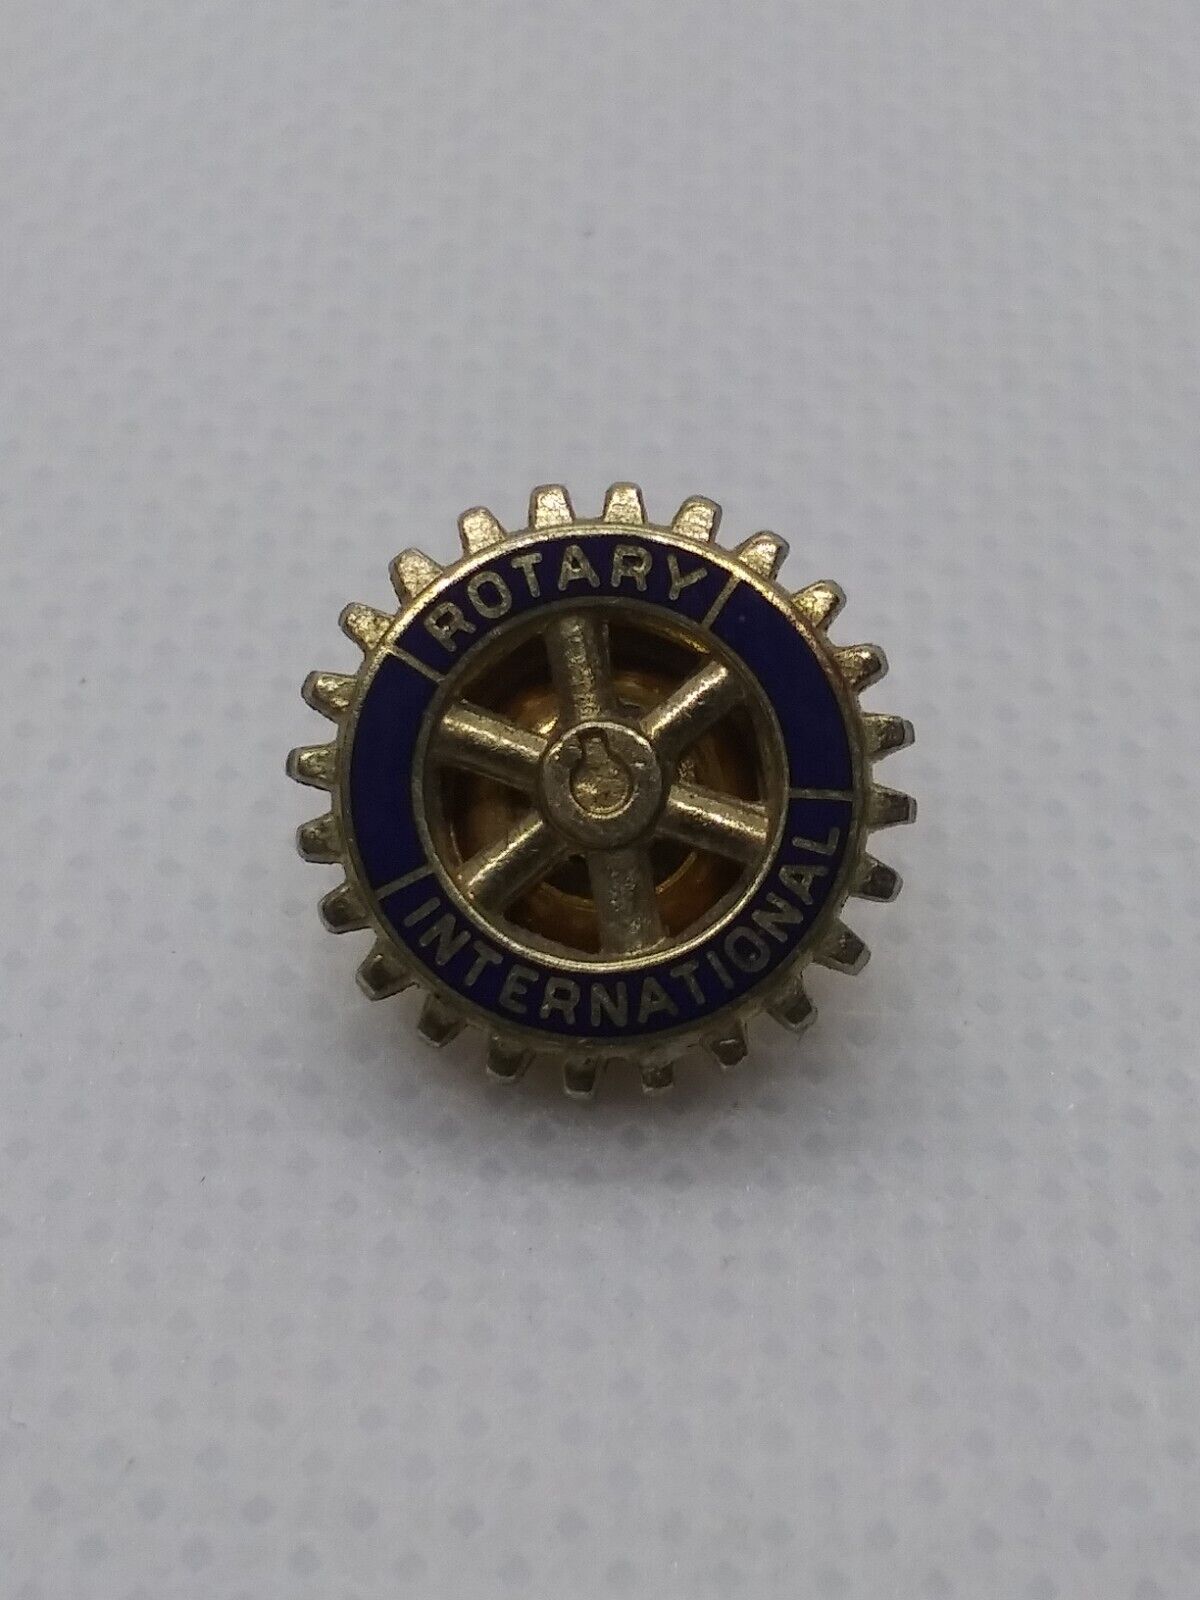 Vintage Rotary International Organization Pin